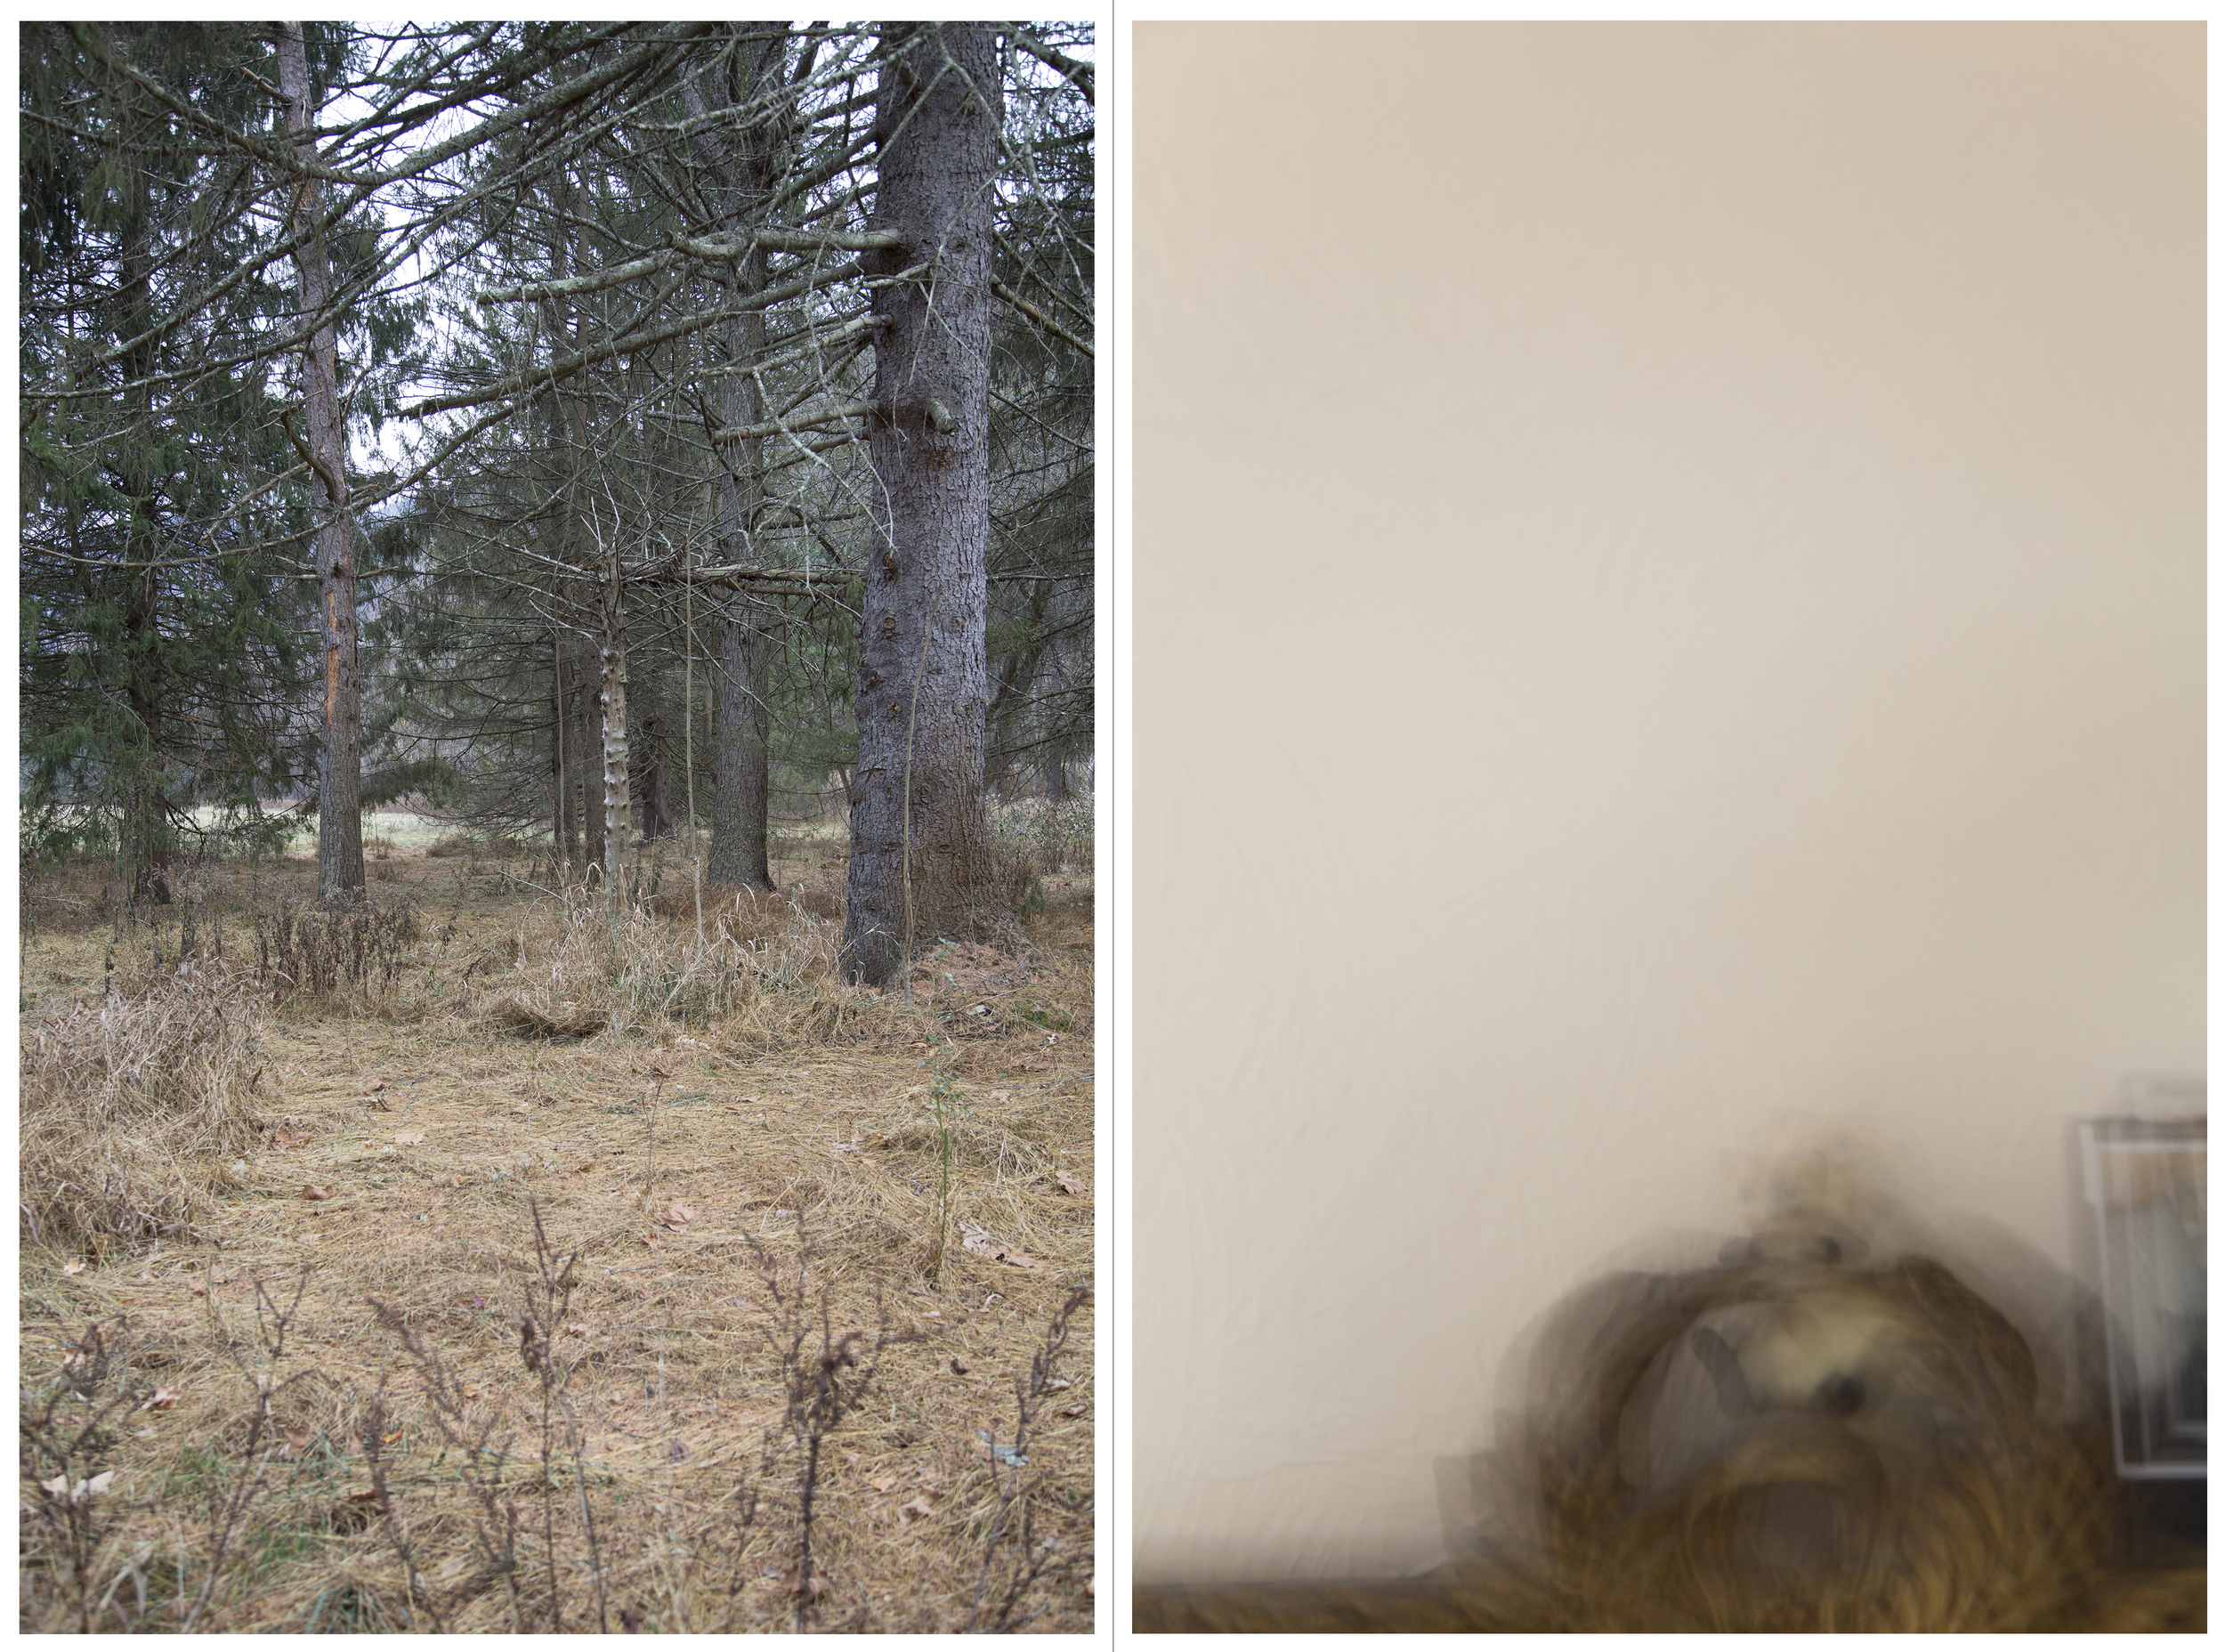 to return: Camp Kline, Deer, Inkjet Photograph, 48" X 36," 2015.